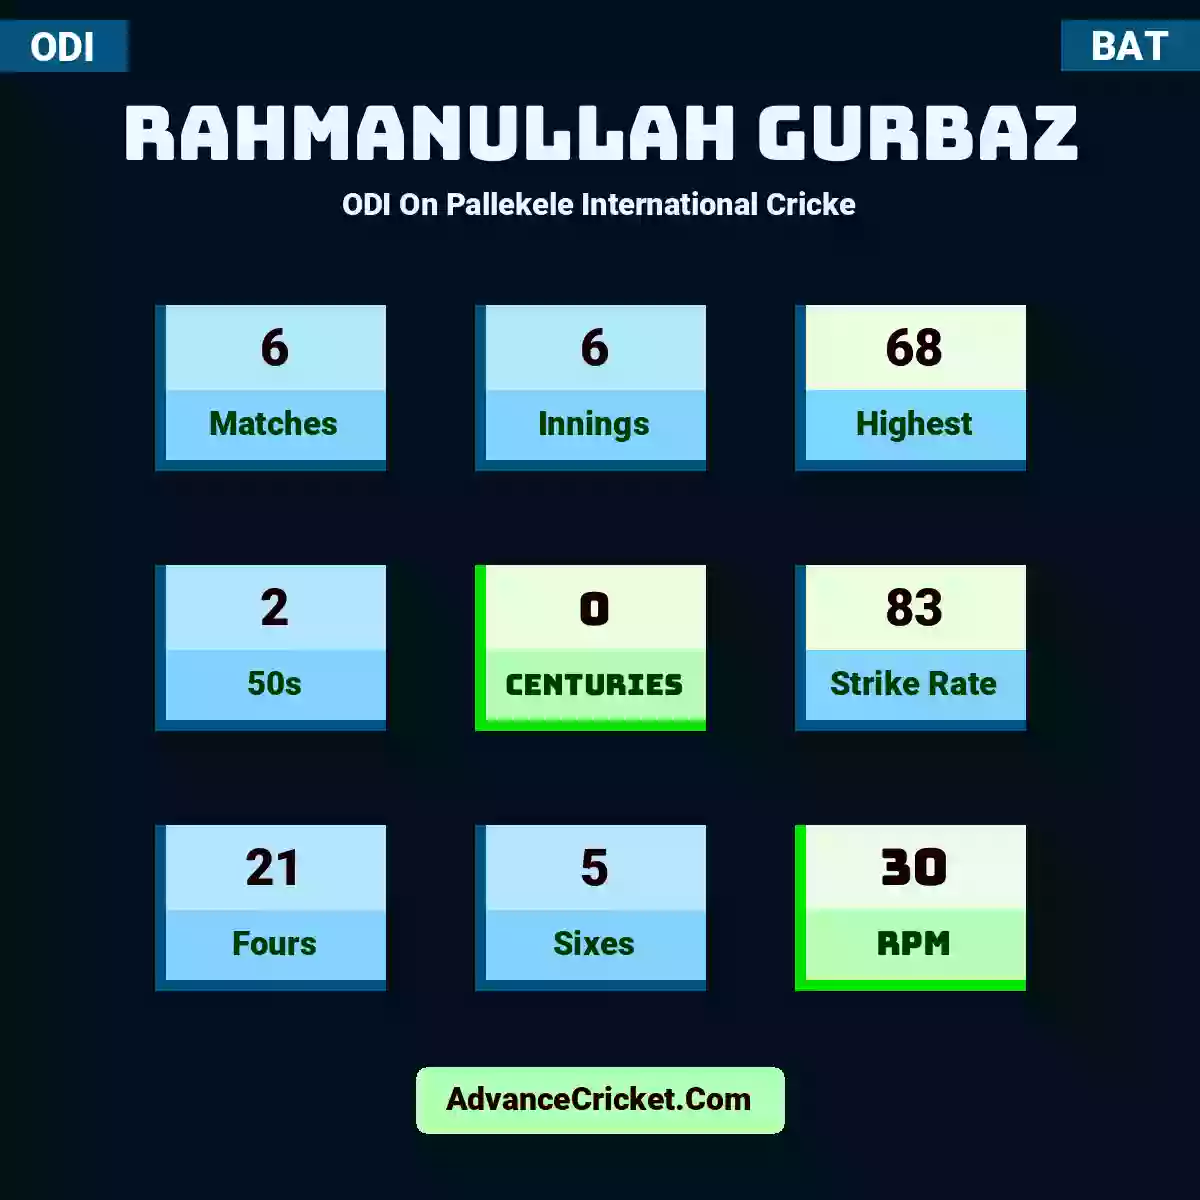 Rahmanullah Gurbaz ODI  On Pallekele International Cricke, Rahmanullah Gurbaz played 6 matches, scored 68 runs as highest, 2 half-centuries, and 0 centuries, with a strike rate of 83. R.Gurbaz hit 21 fours and 5 sixes, with an RPM of 30.